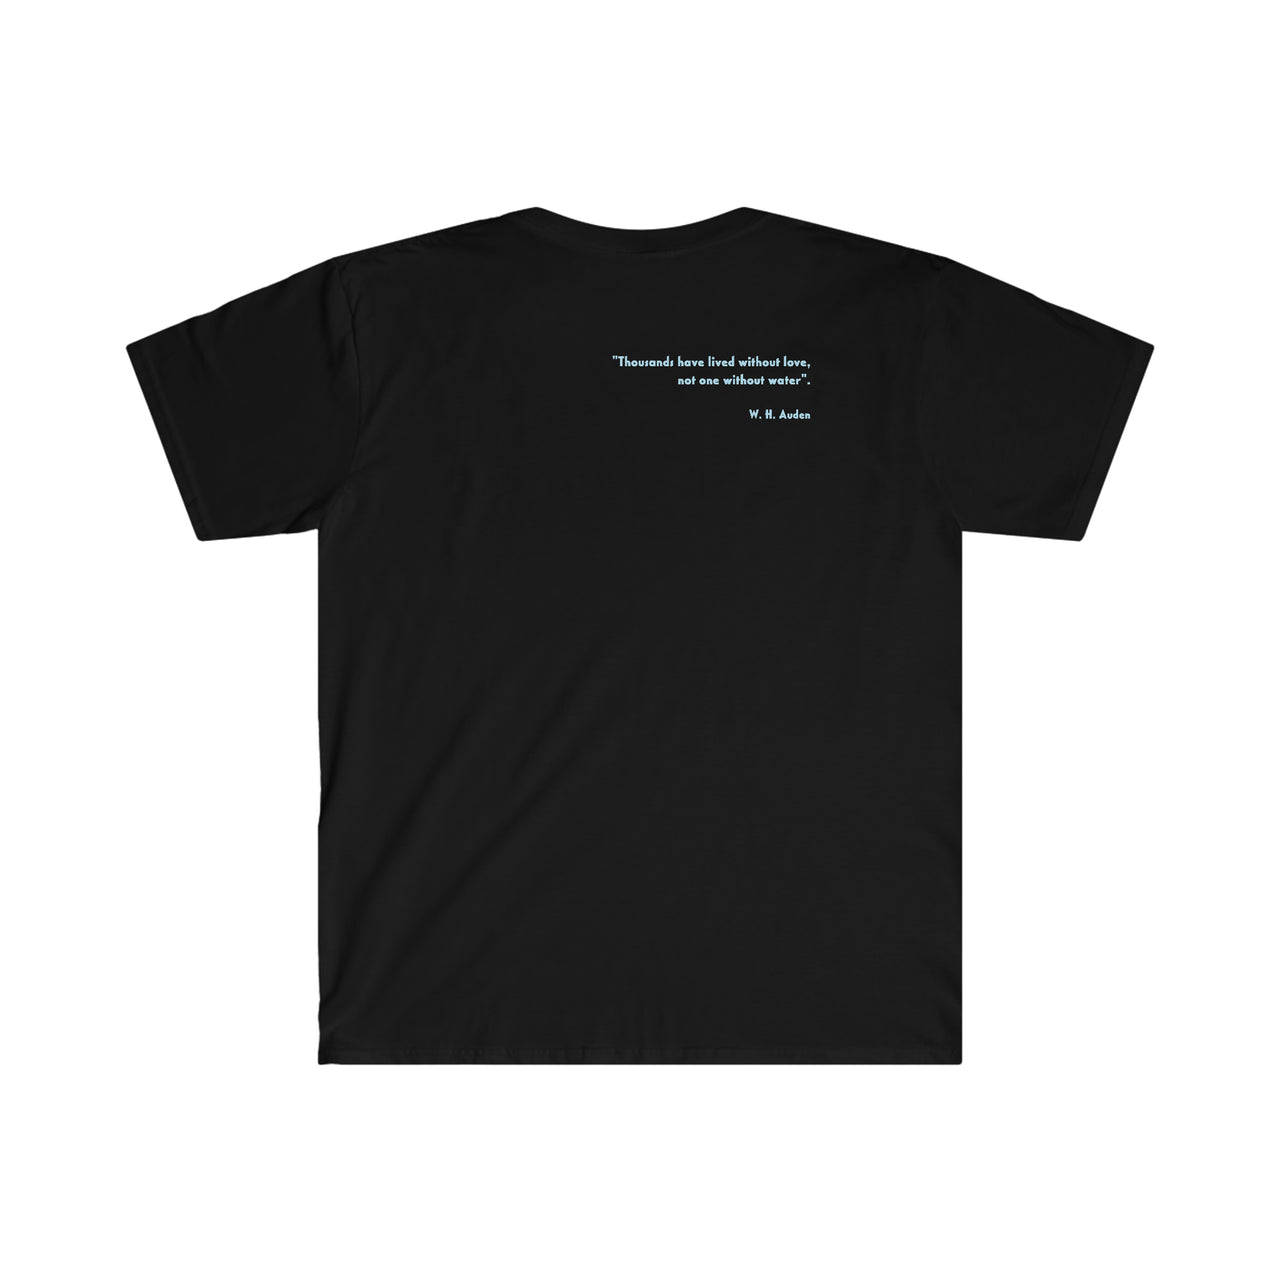 HYDROREACH Unisex Softstyle T-Shirt - Shady Lion Coffee Co.